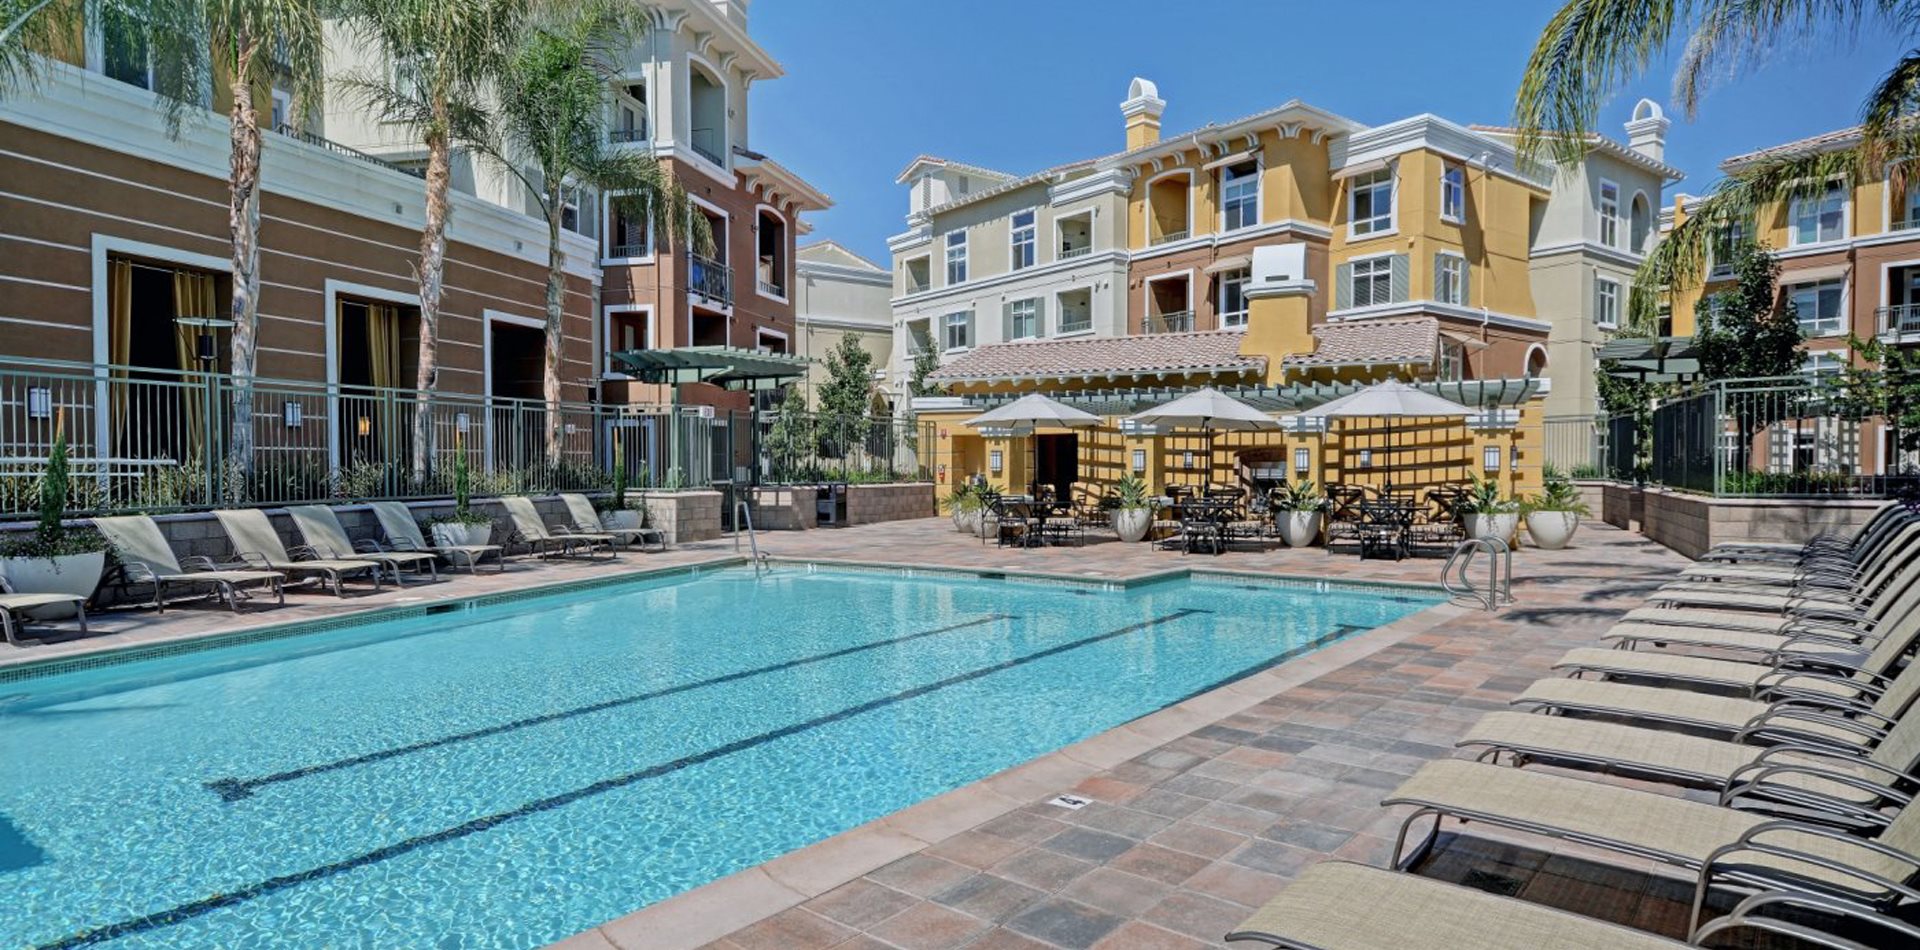 The Verdant Apartments Apartments For Rent San Jose